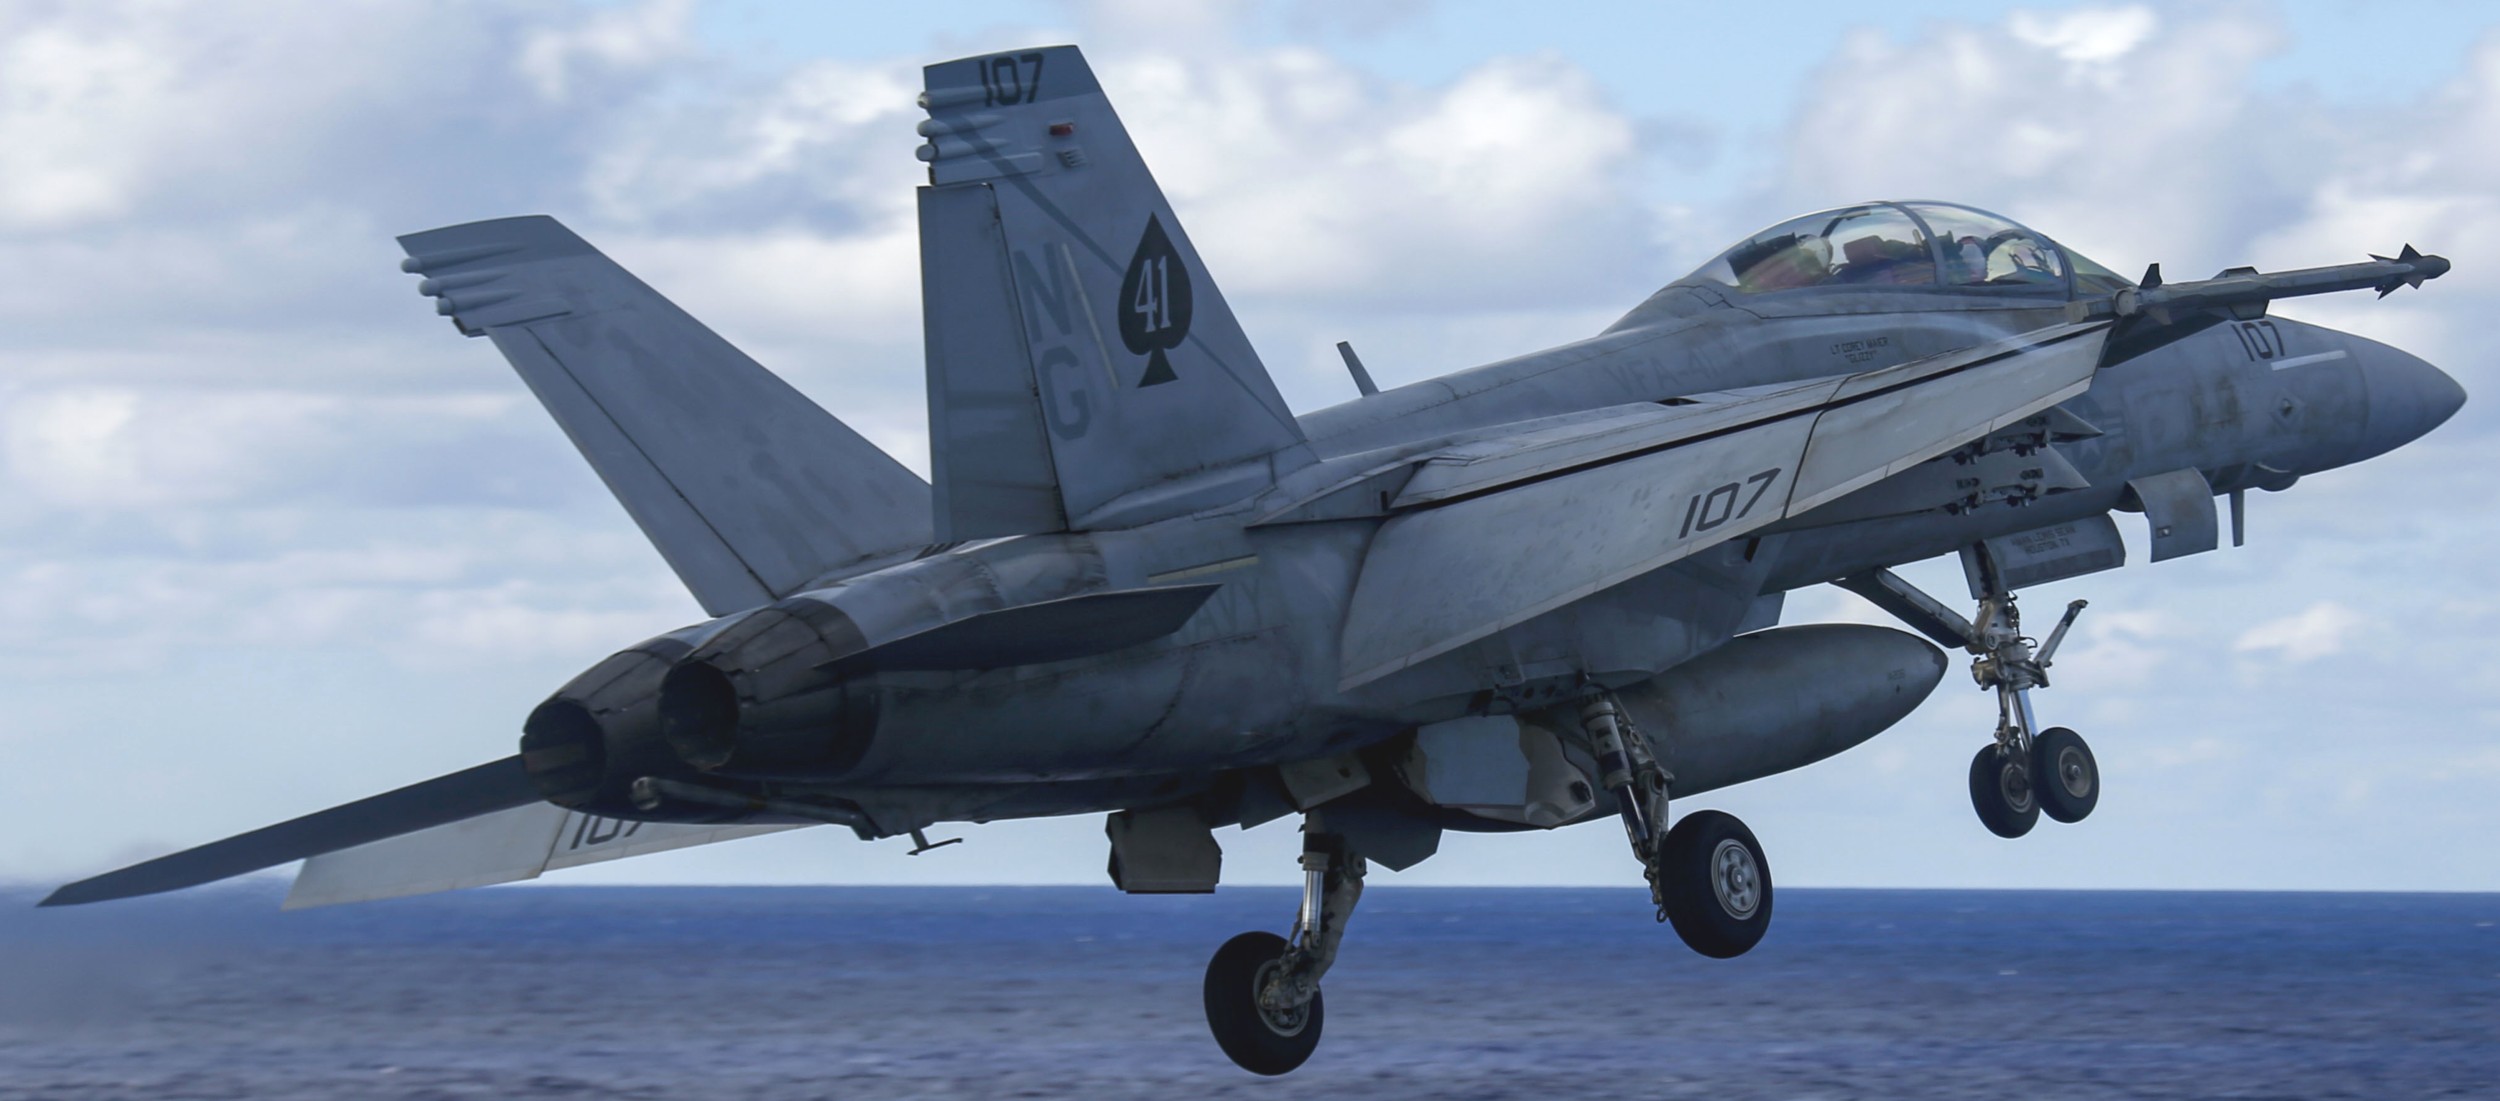 vfa-41 black aces strike fighter squadron f/a-18f super hornet cvw-9 cvn-72 uss abraham lincoln us navy 105